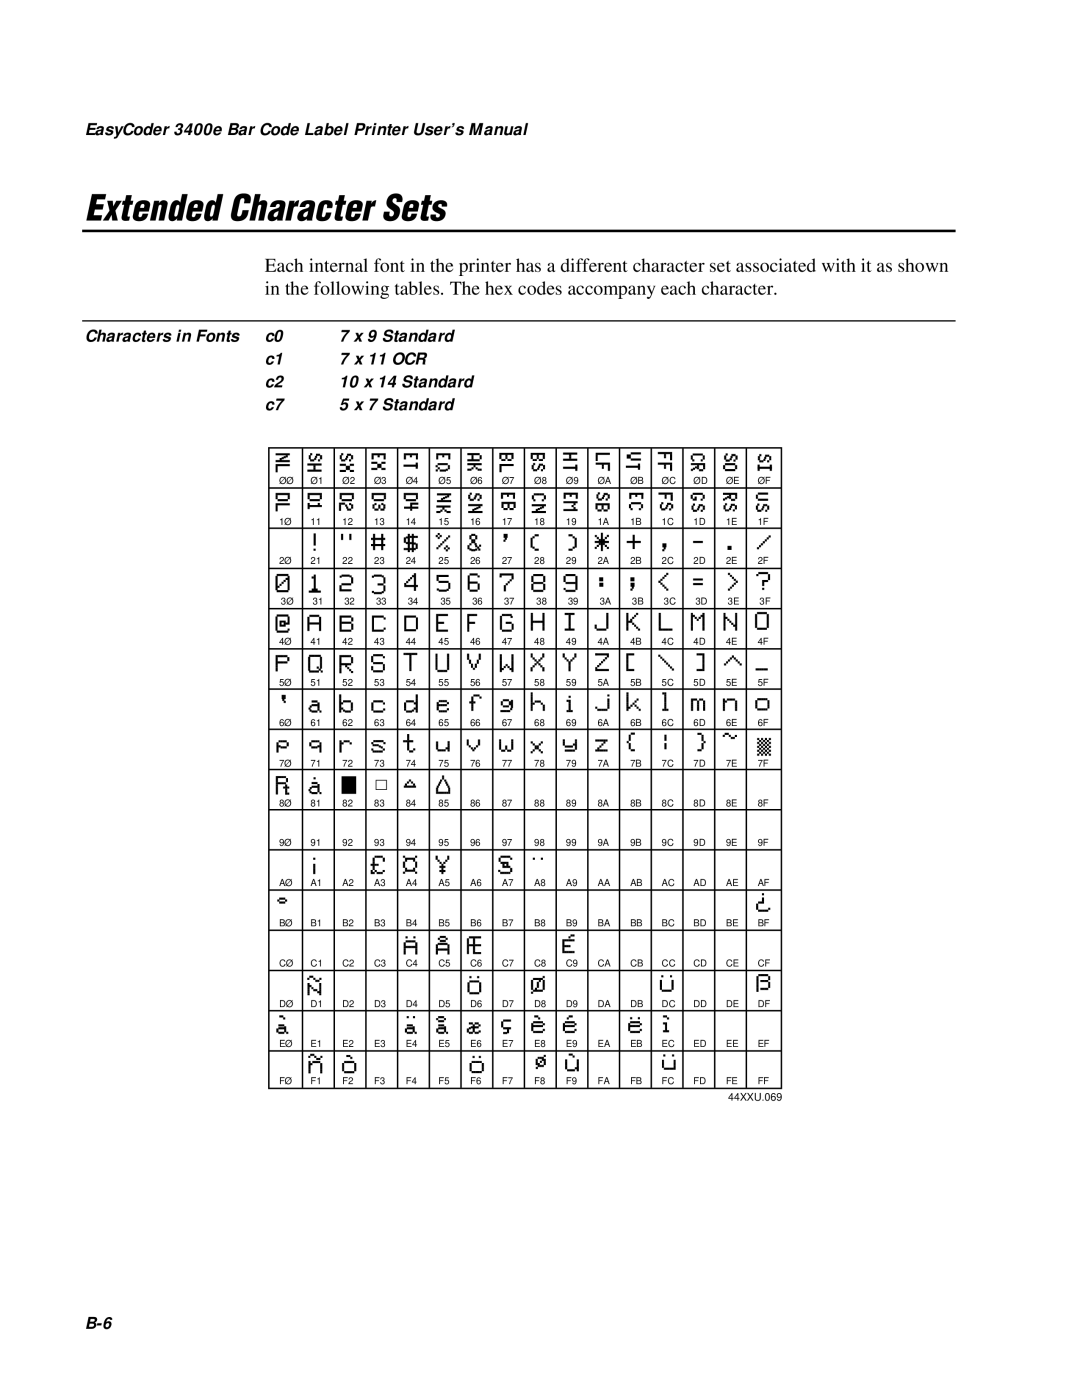 IBM Extended Character Sets, EasyCoder 3400e Bar Code Label Printer User’s Manual, 10 x 14 Standard, 7 x 9 Standard 